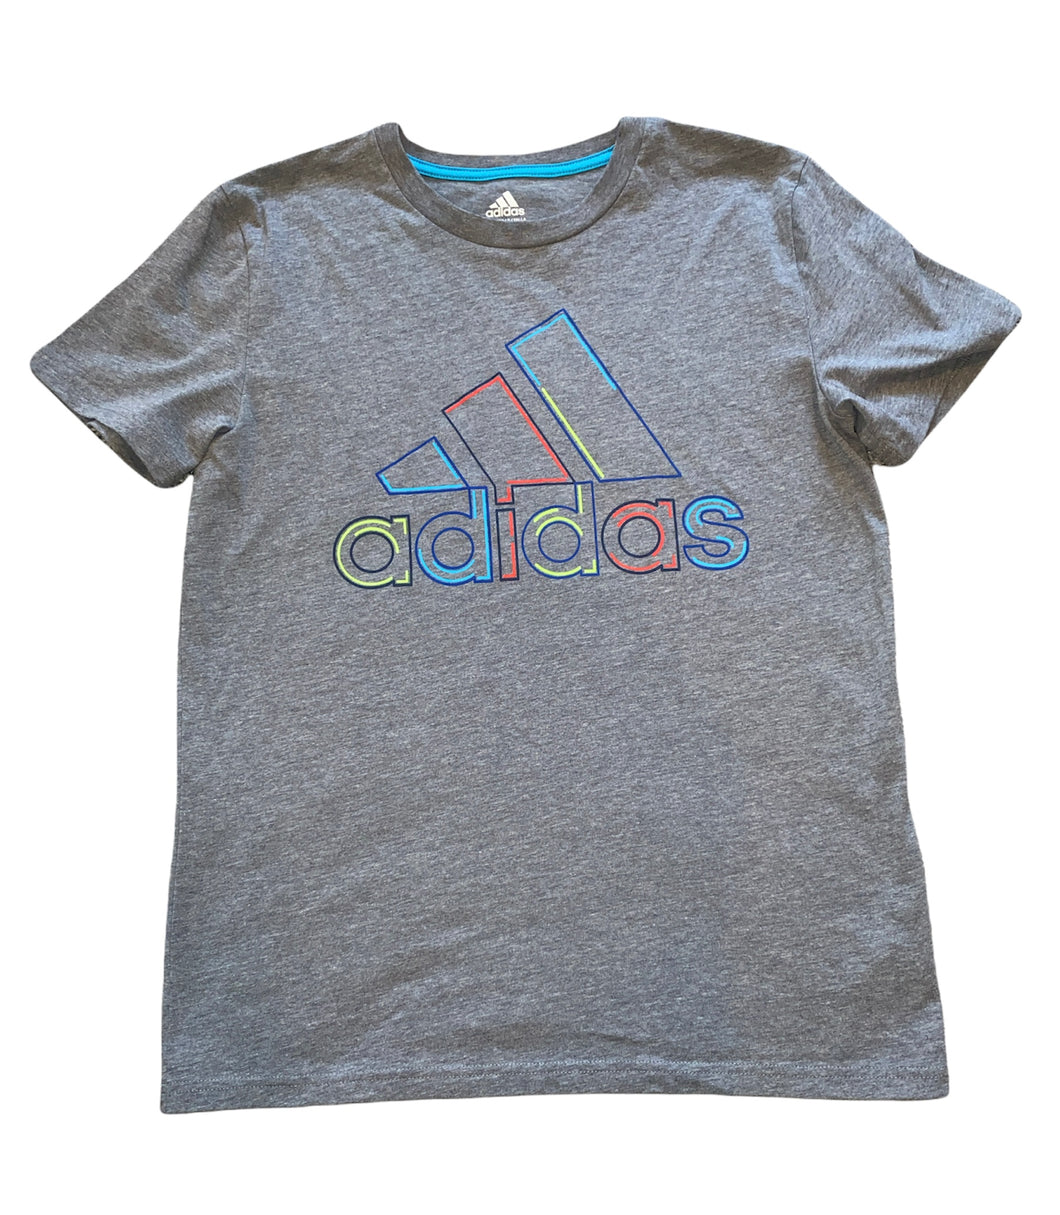 Adidas boys cotton logo tee shirt L(14-16)